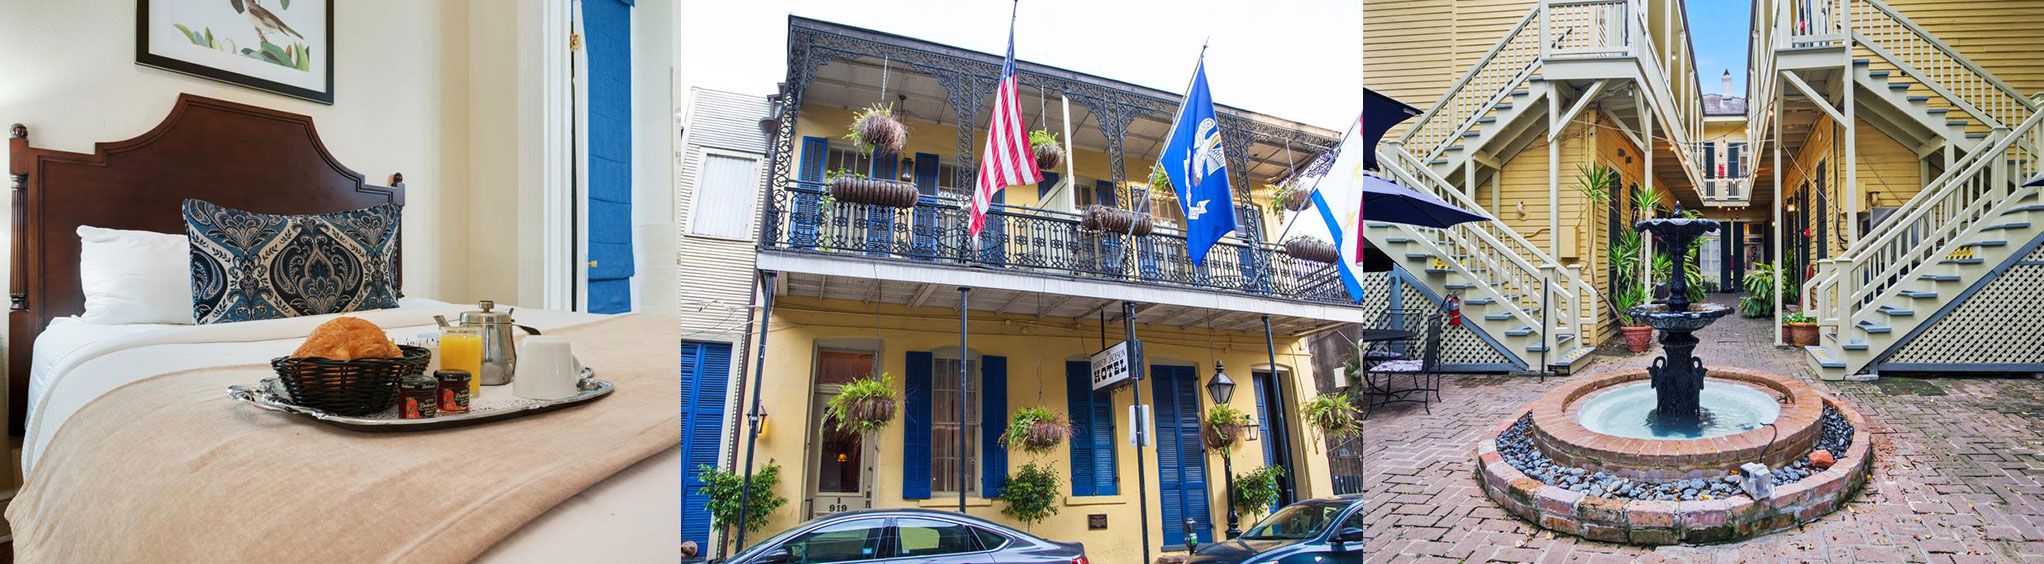 Andrew Jackson Hotel in New Orleans, LA